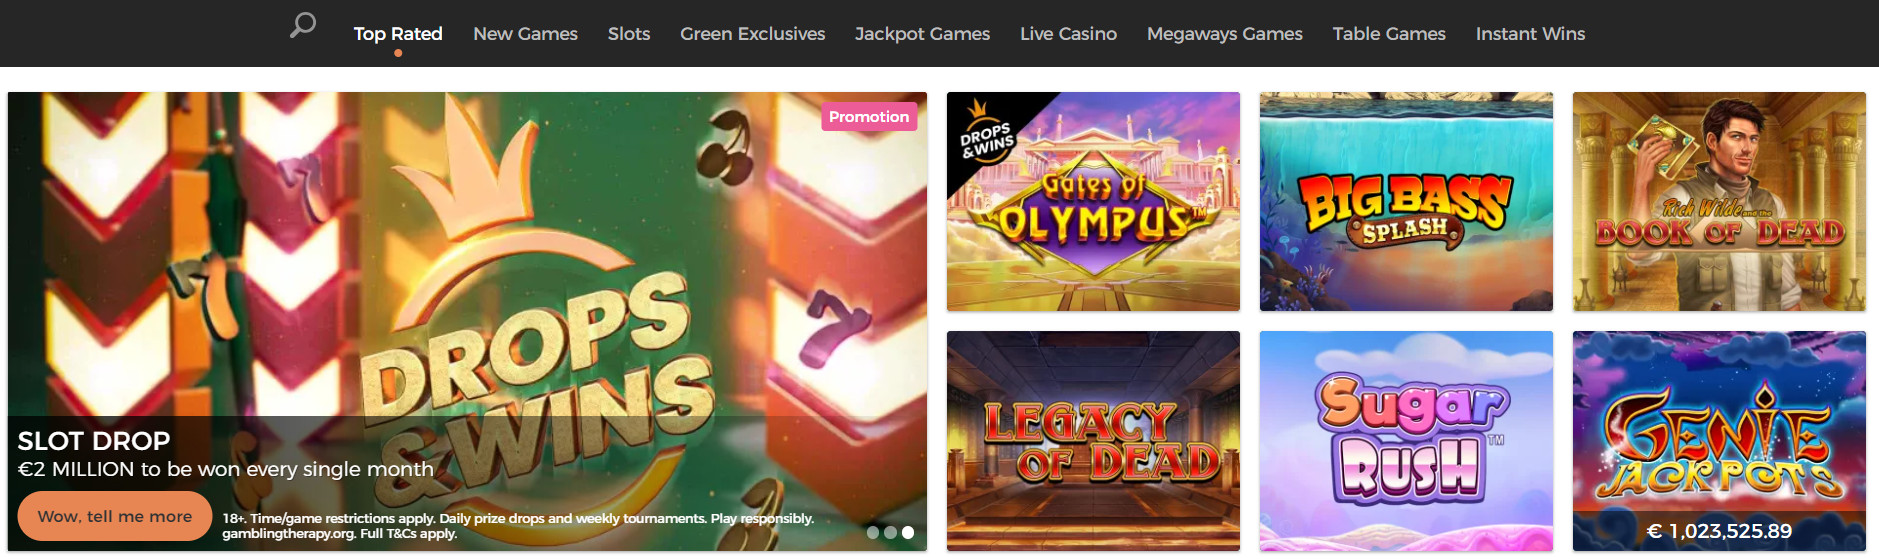 Top Rated Games at Mr Green Casino Screenshot